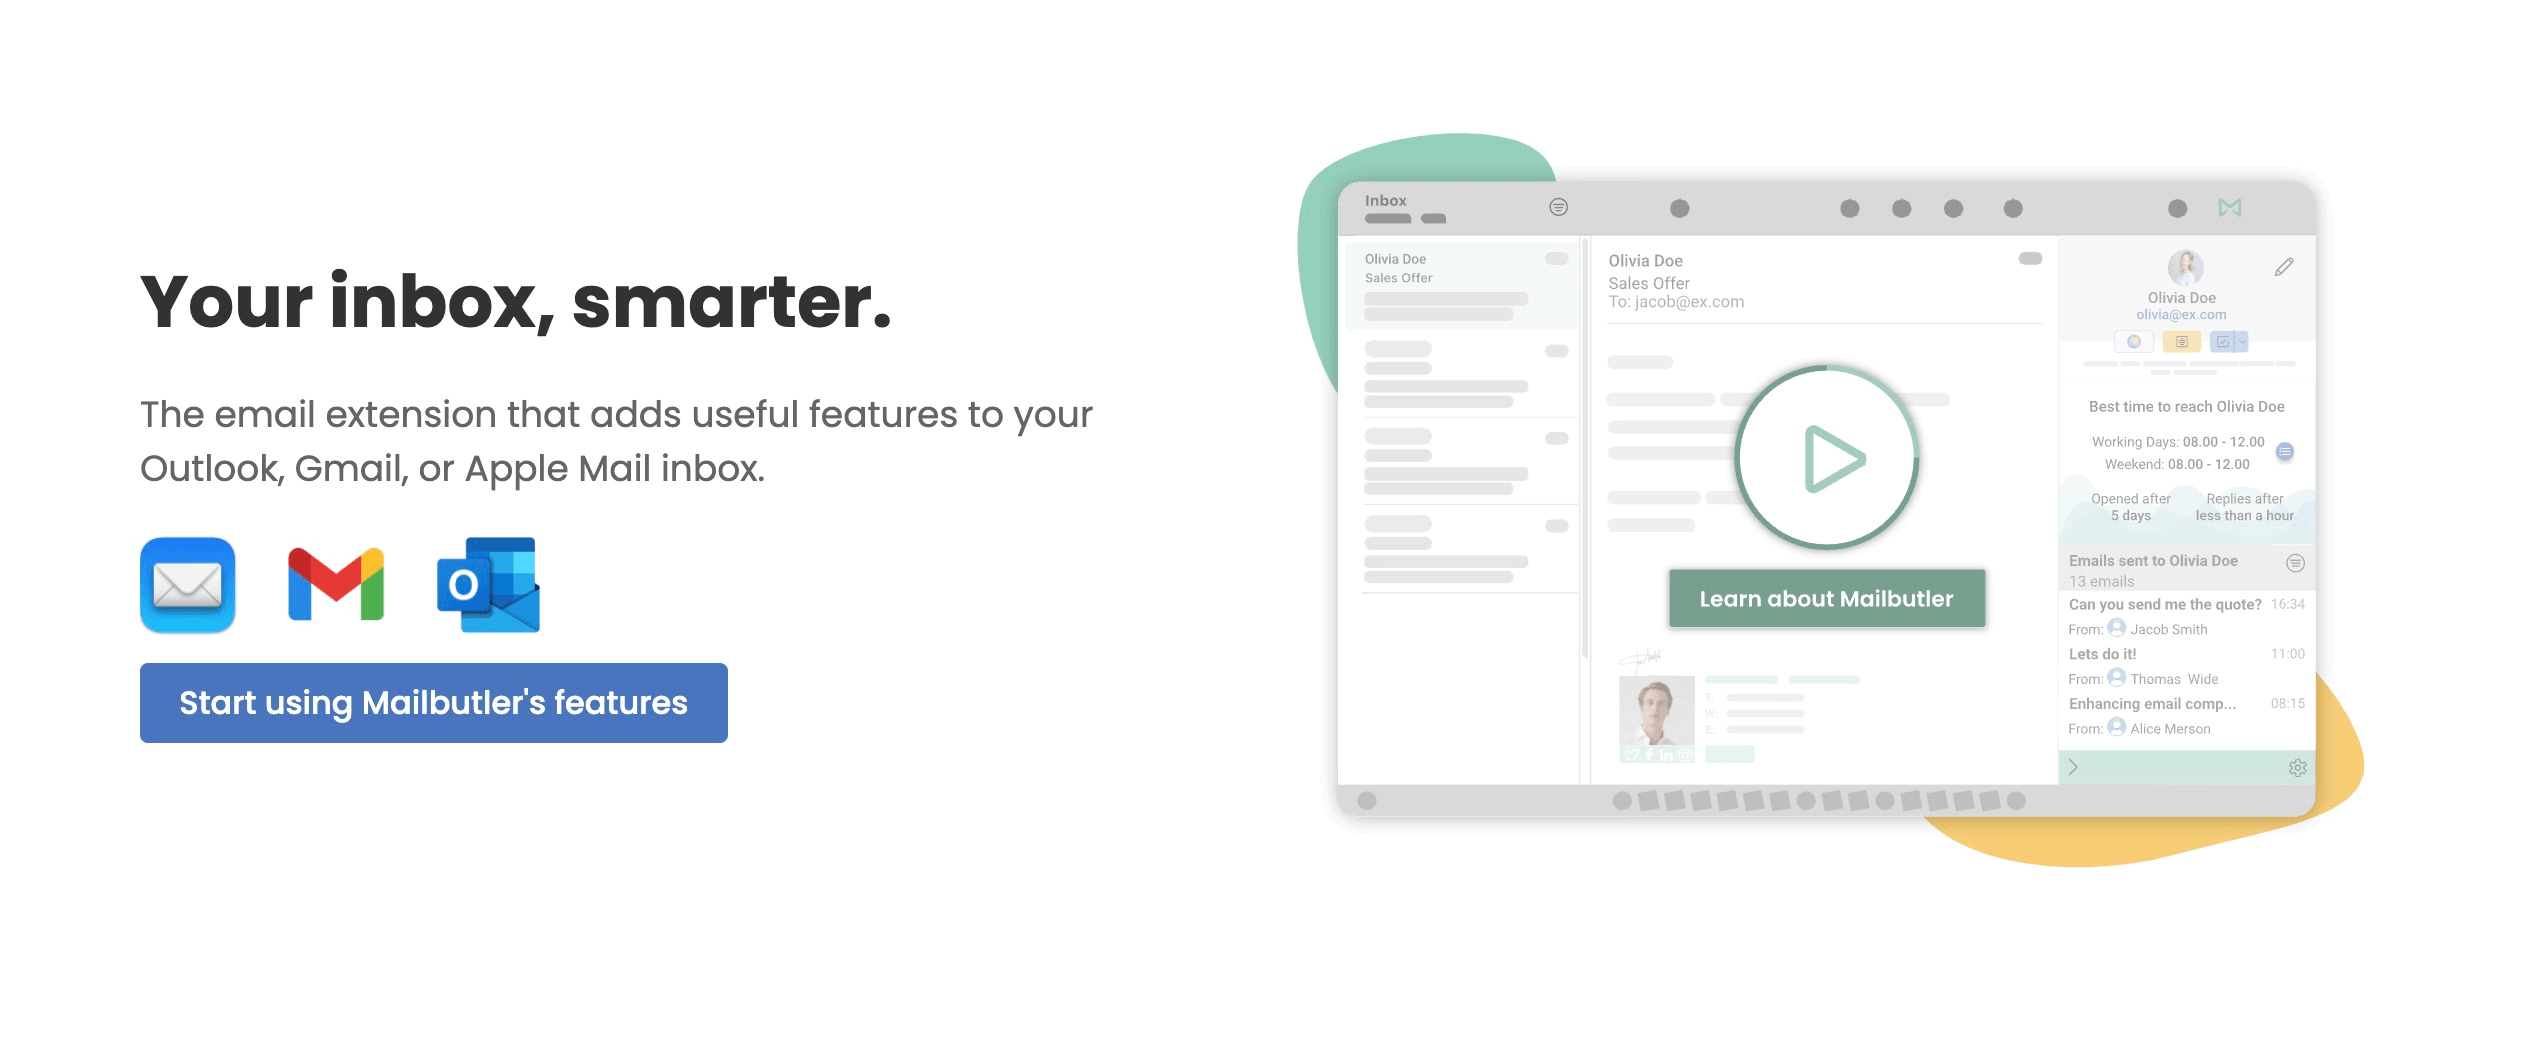 Mailbutler's website, highlighting the smarter inbox assistant.